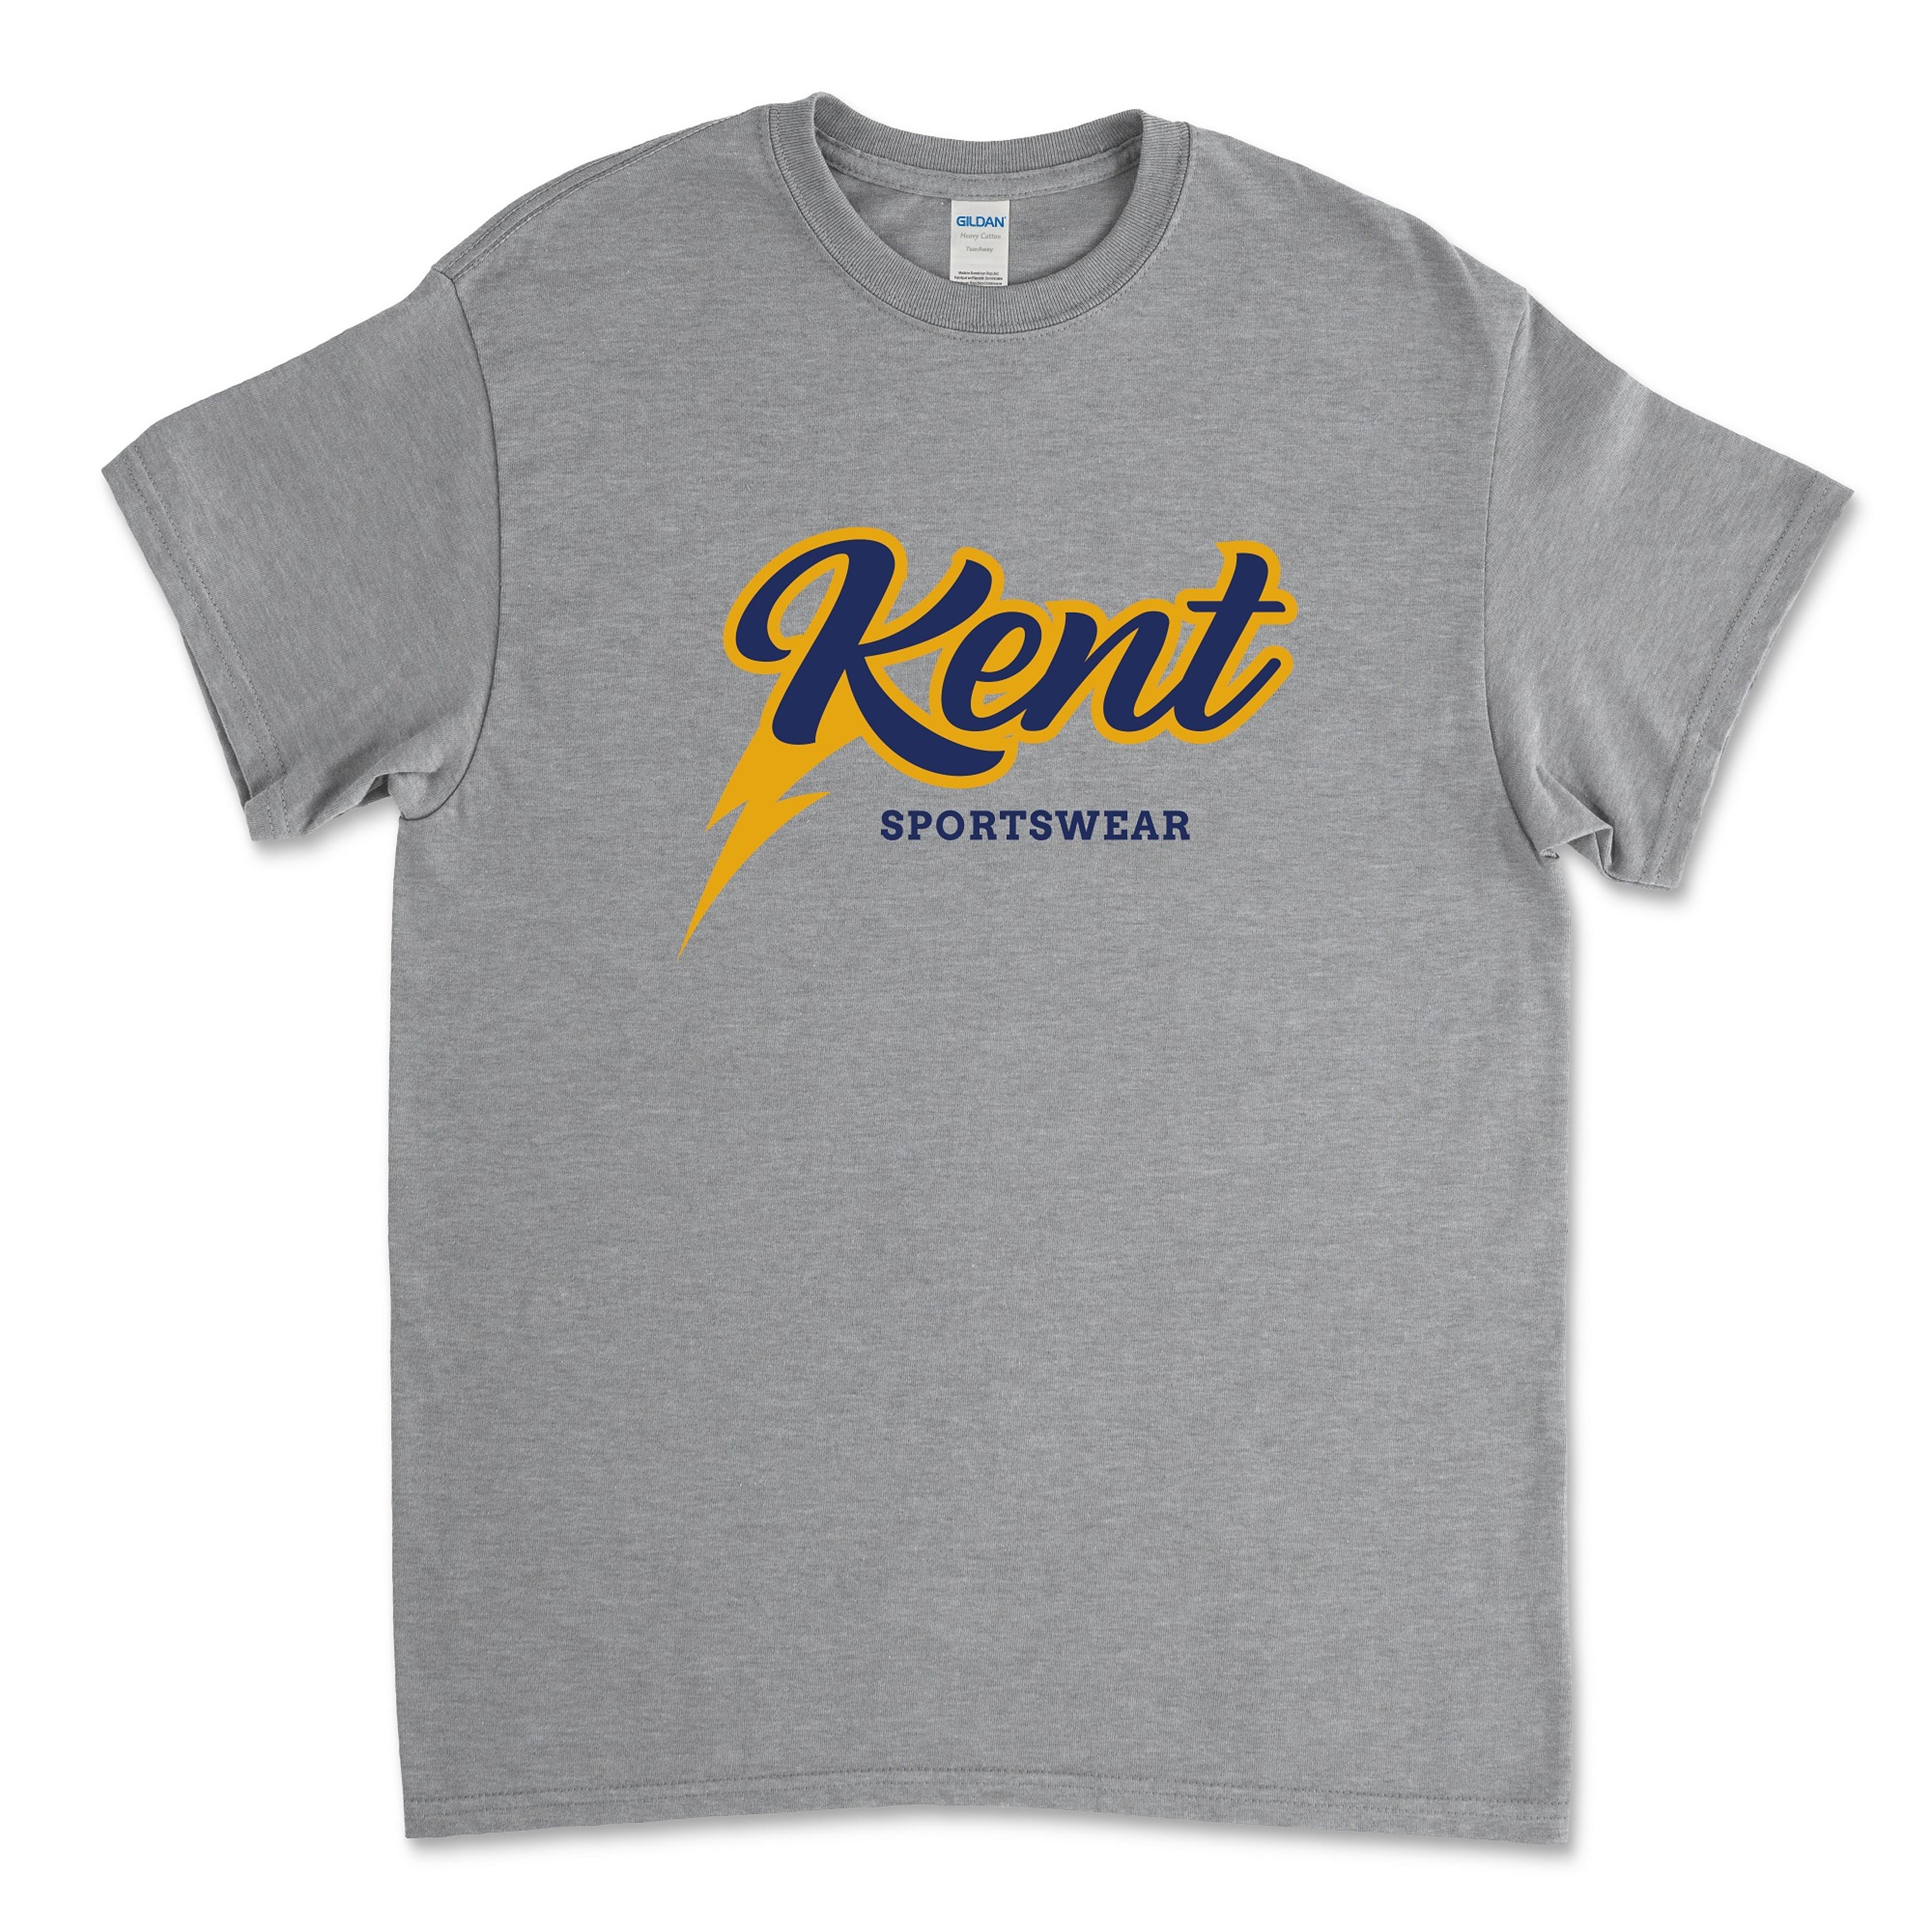 Kent Sportswear Gray T-Shirt